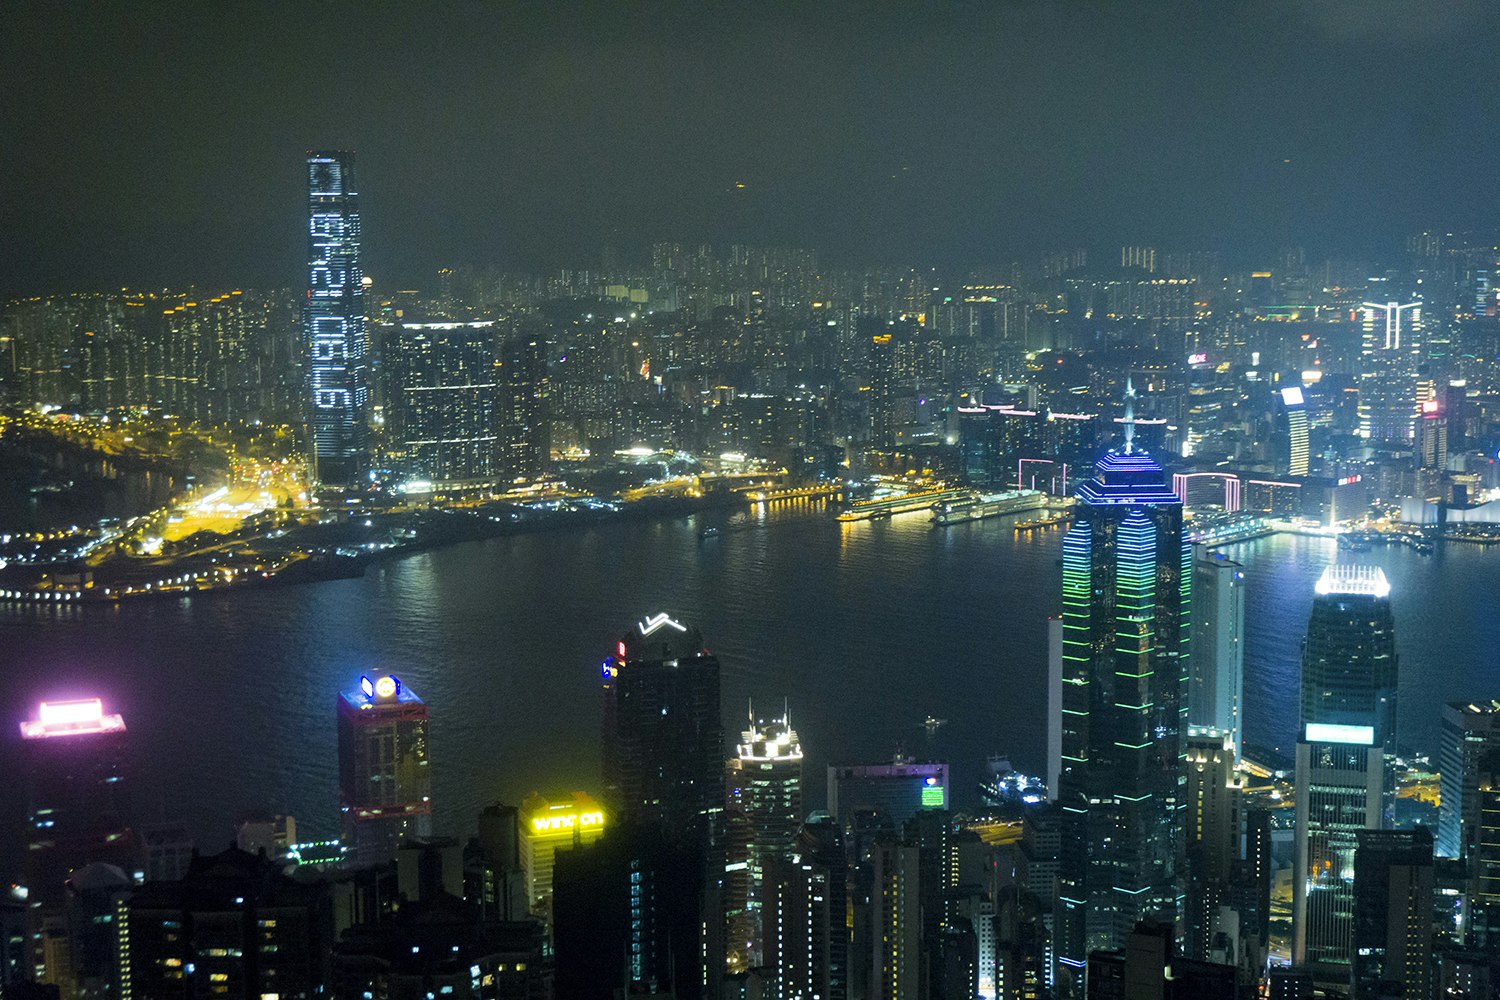 Illuminated skyscrapers in Hong Kong.